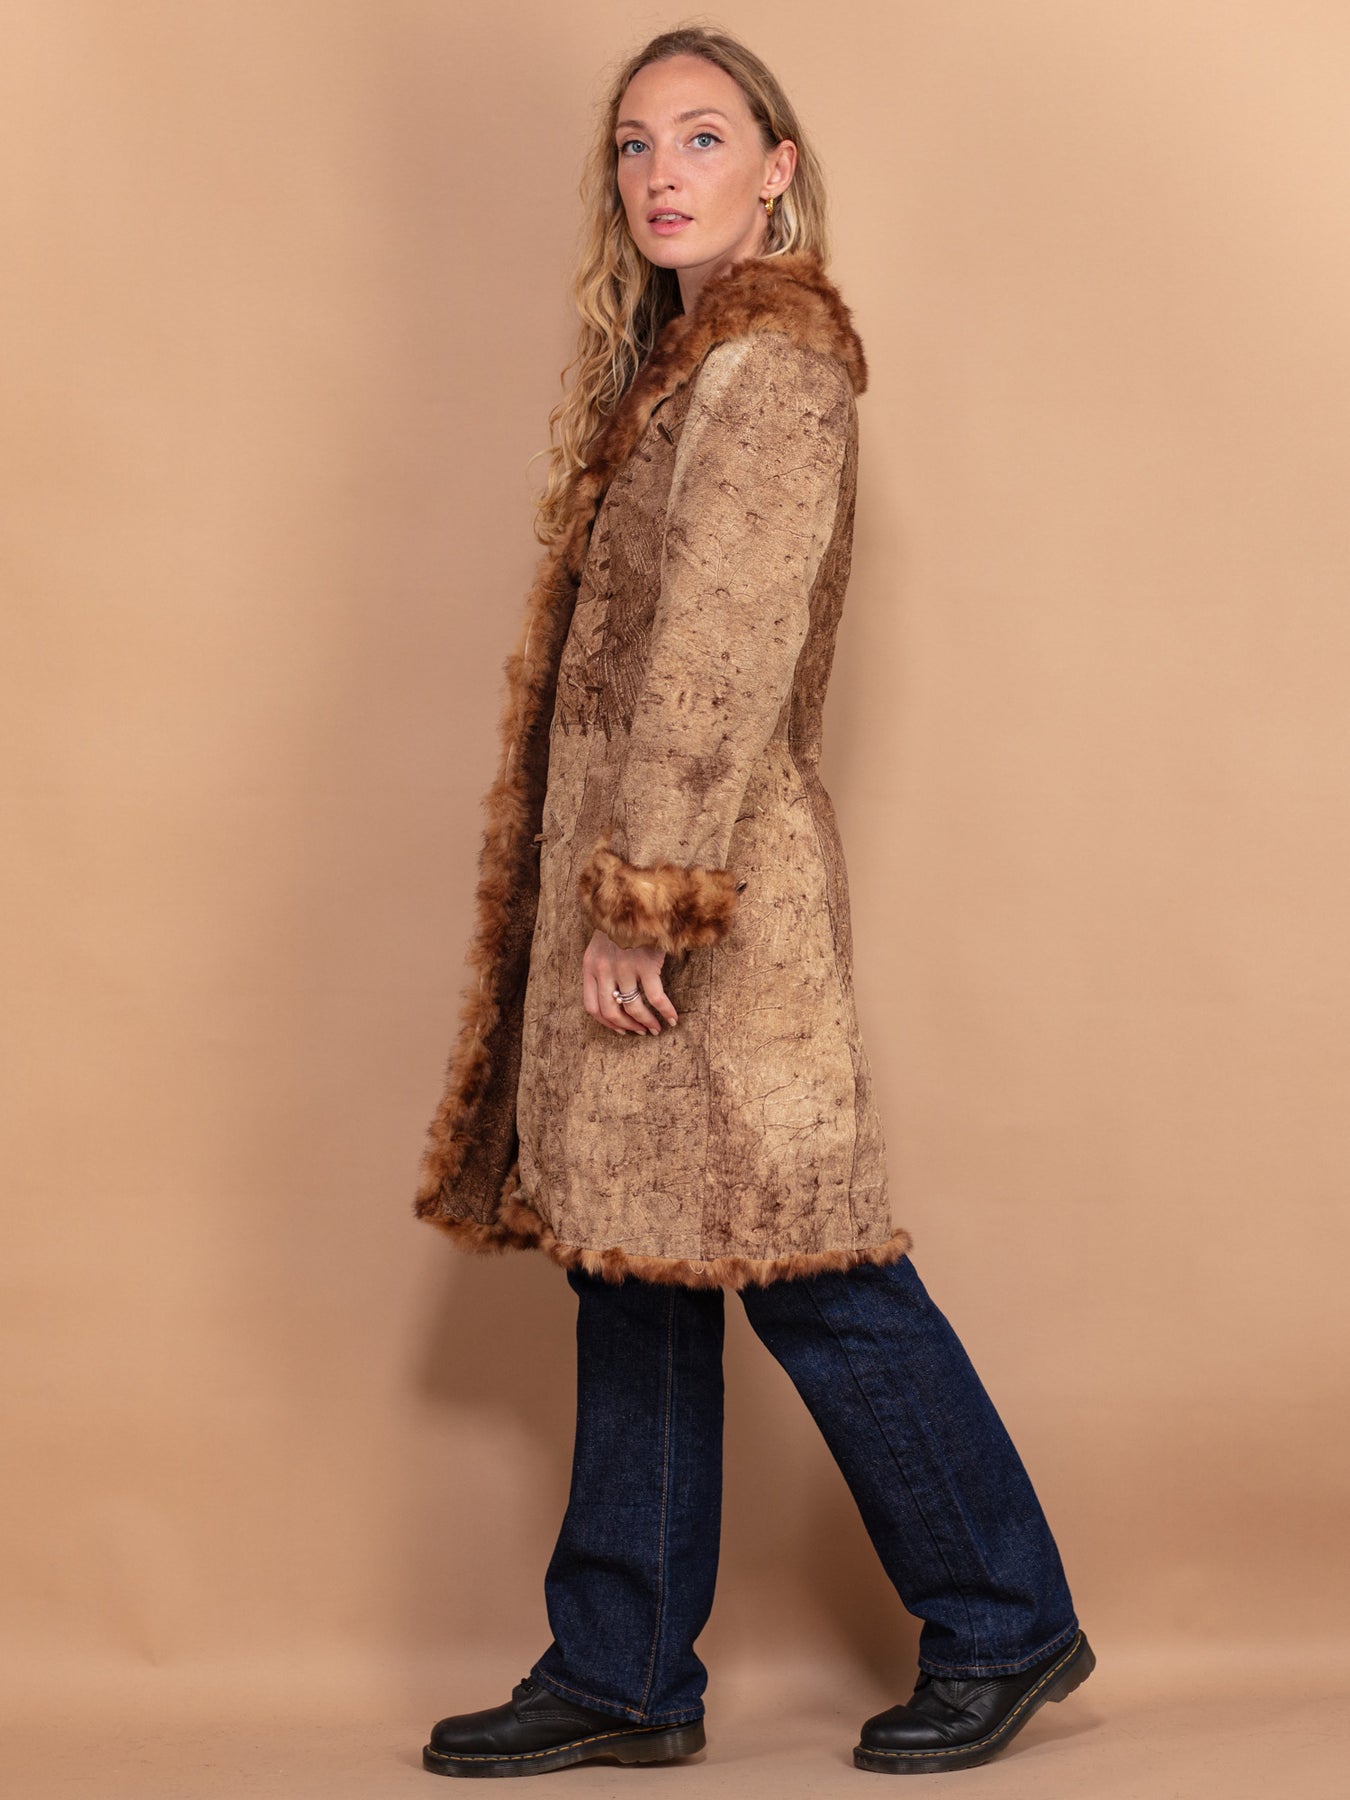 Northern Women Fur | Store 90\'s | – Coat Vintage Penny Lane Grip Online NorthernGrip